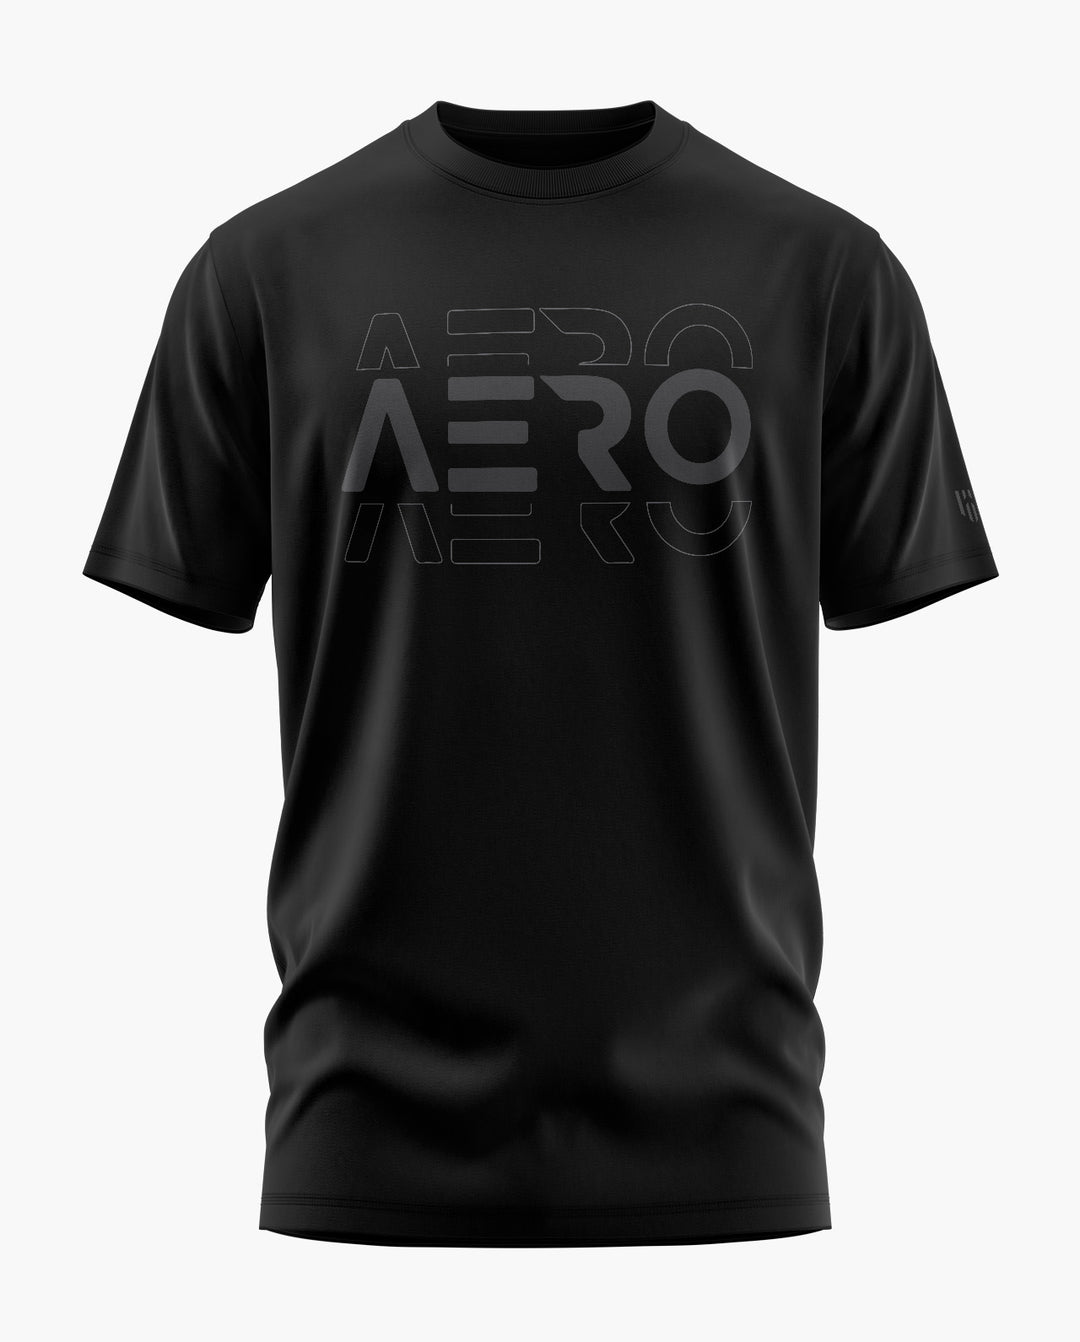 AERO SIGN T-Shirt